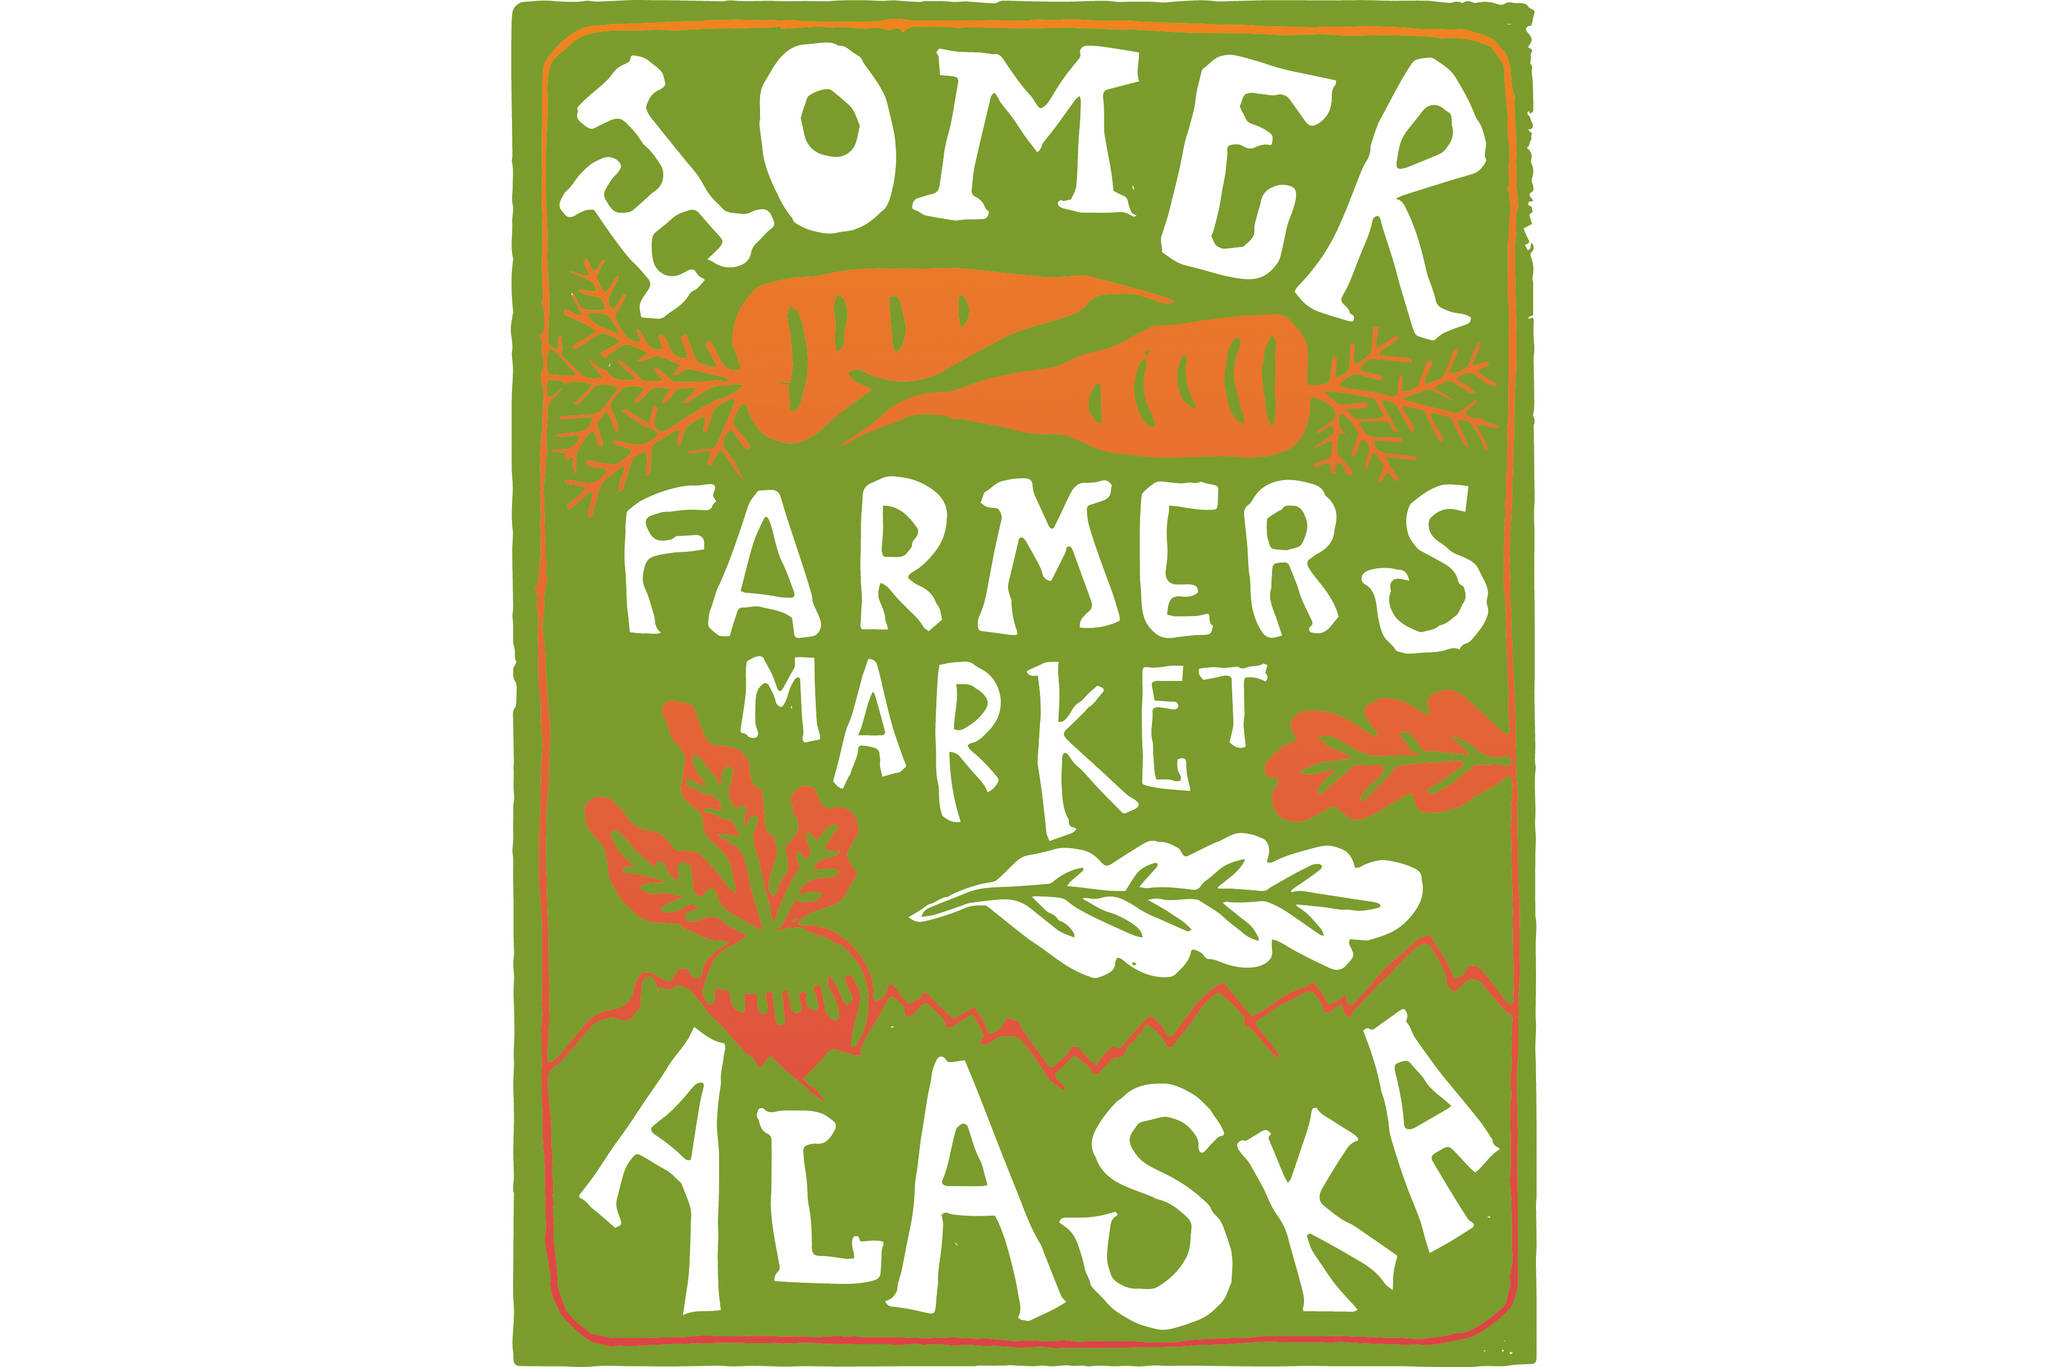 Homer Farmers Market: Alaska farming boom is a mini revolution